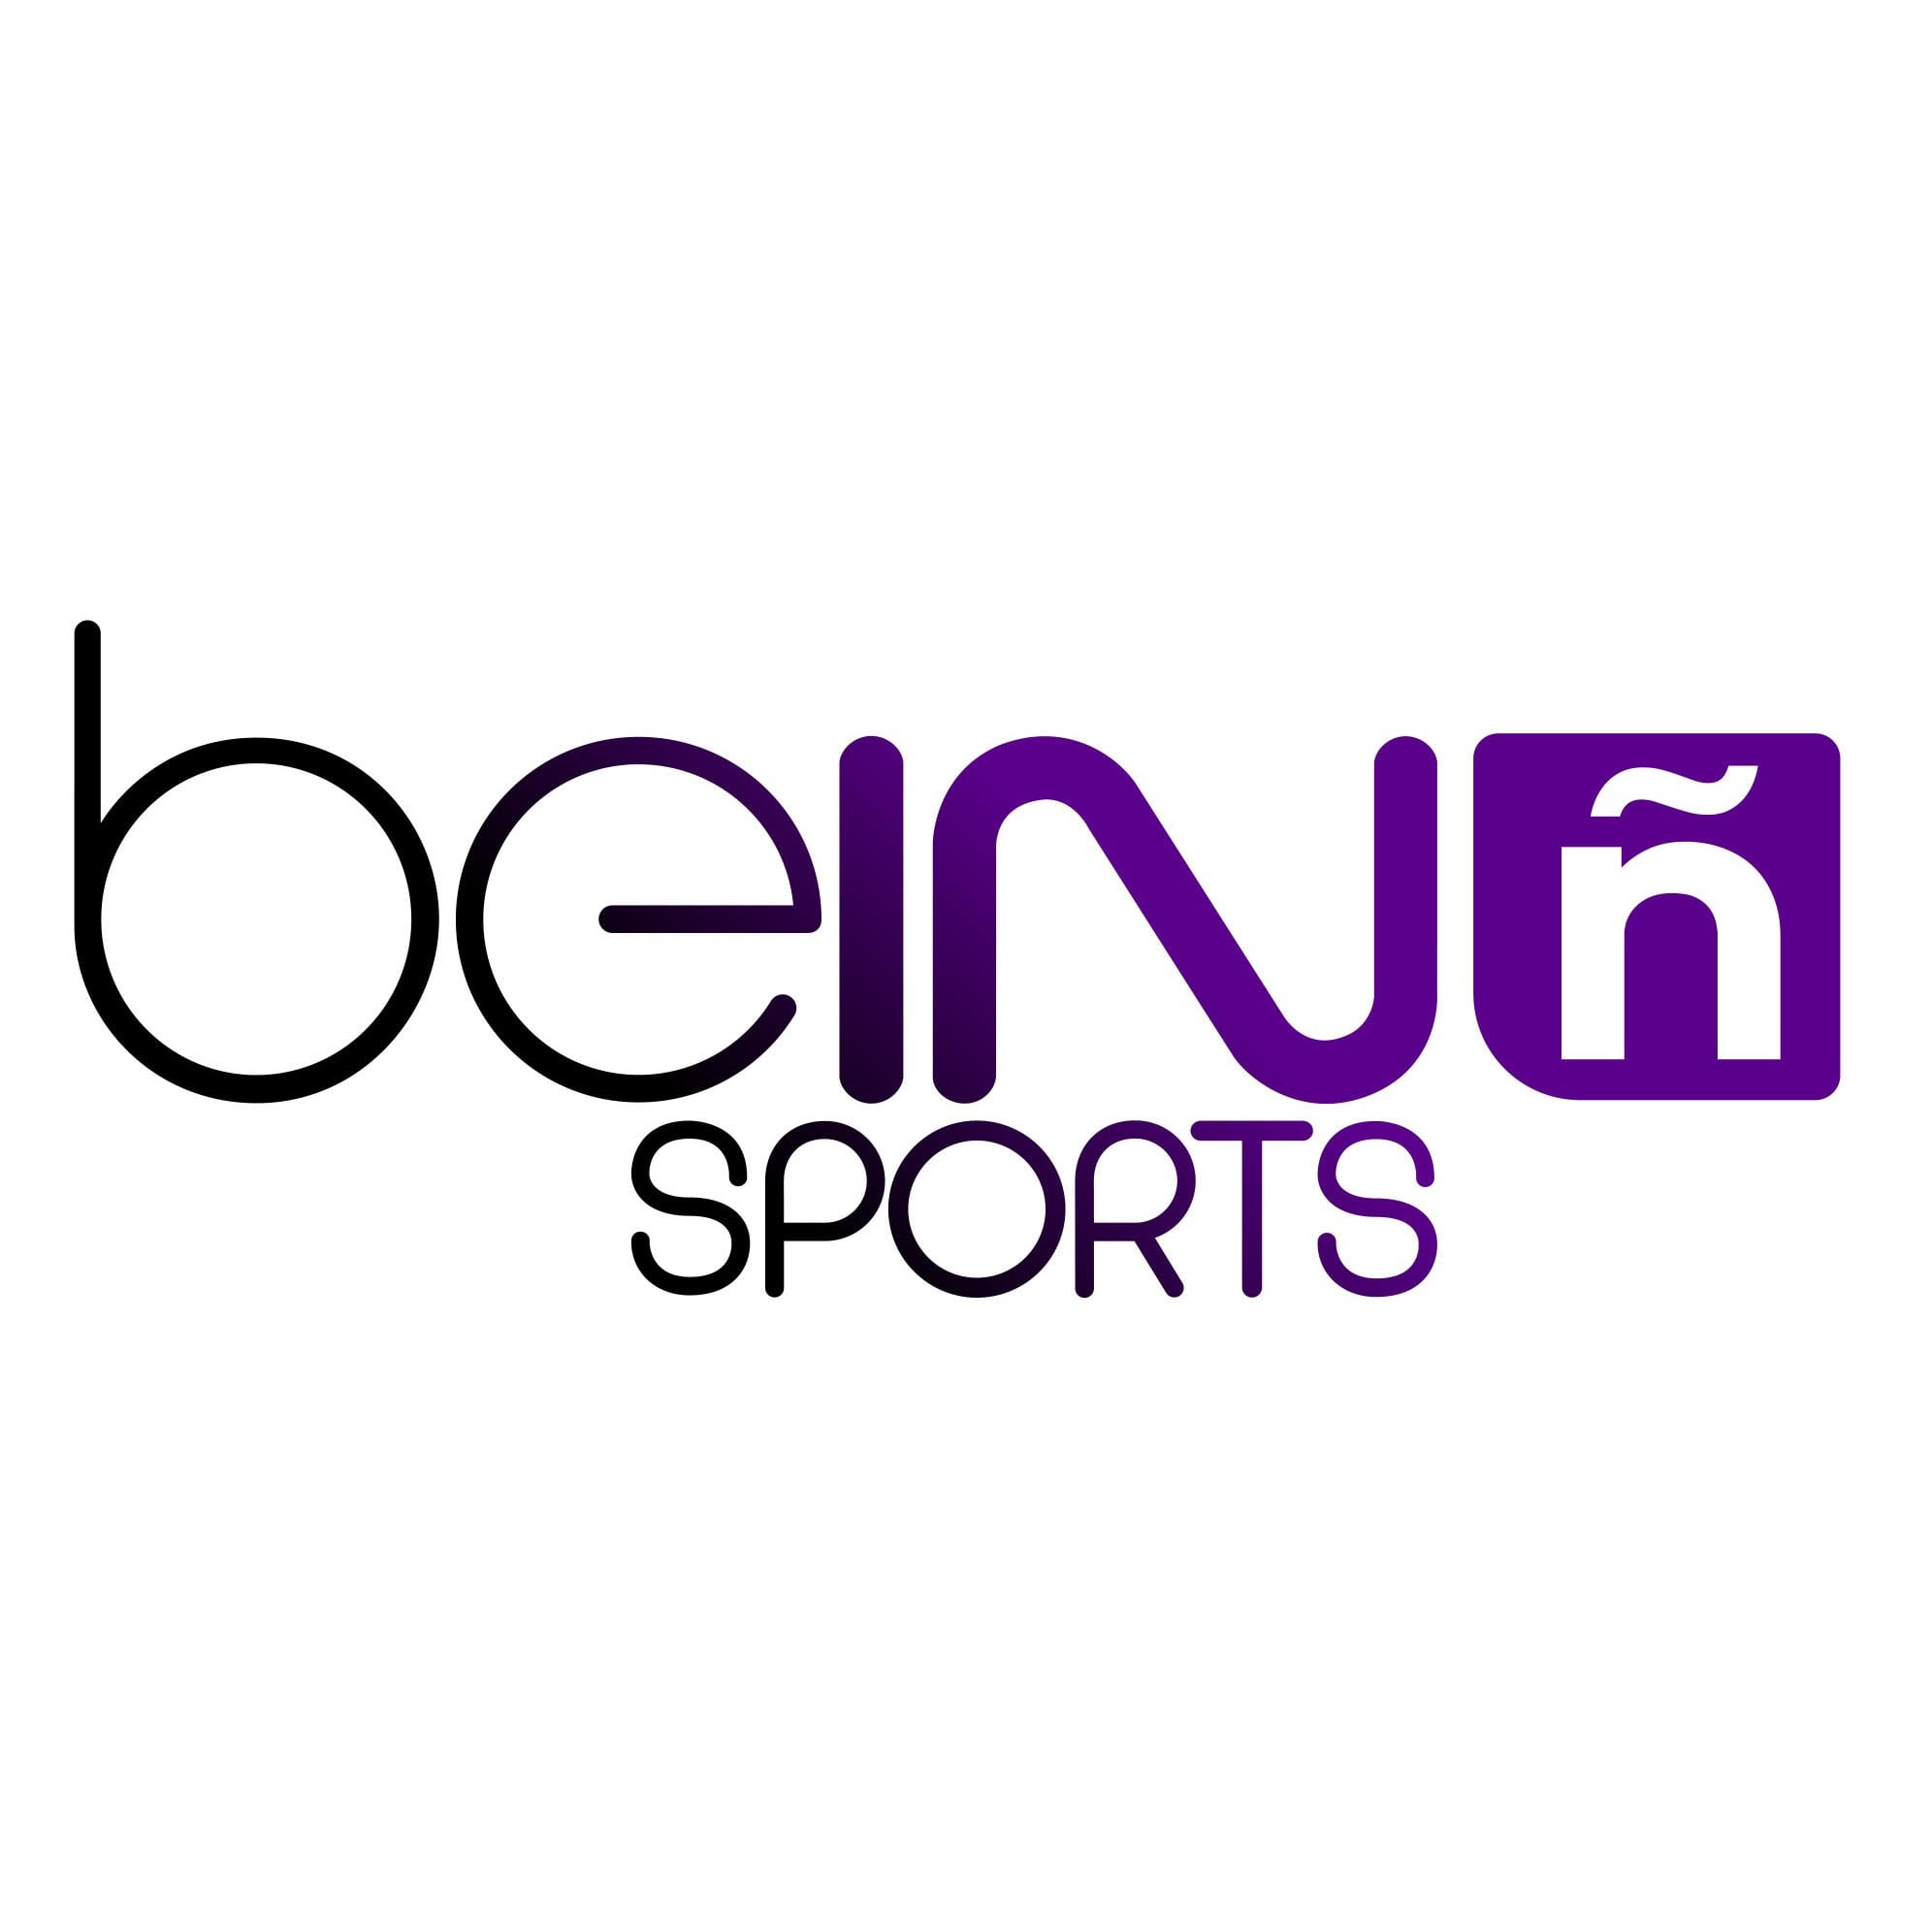 Bein sports live sport streaming. Логотип Телеканал Bein Sports. Bein Sports Max 2. Bein Sport Max hd1.